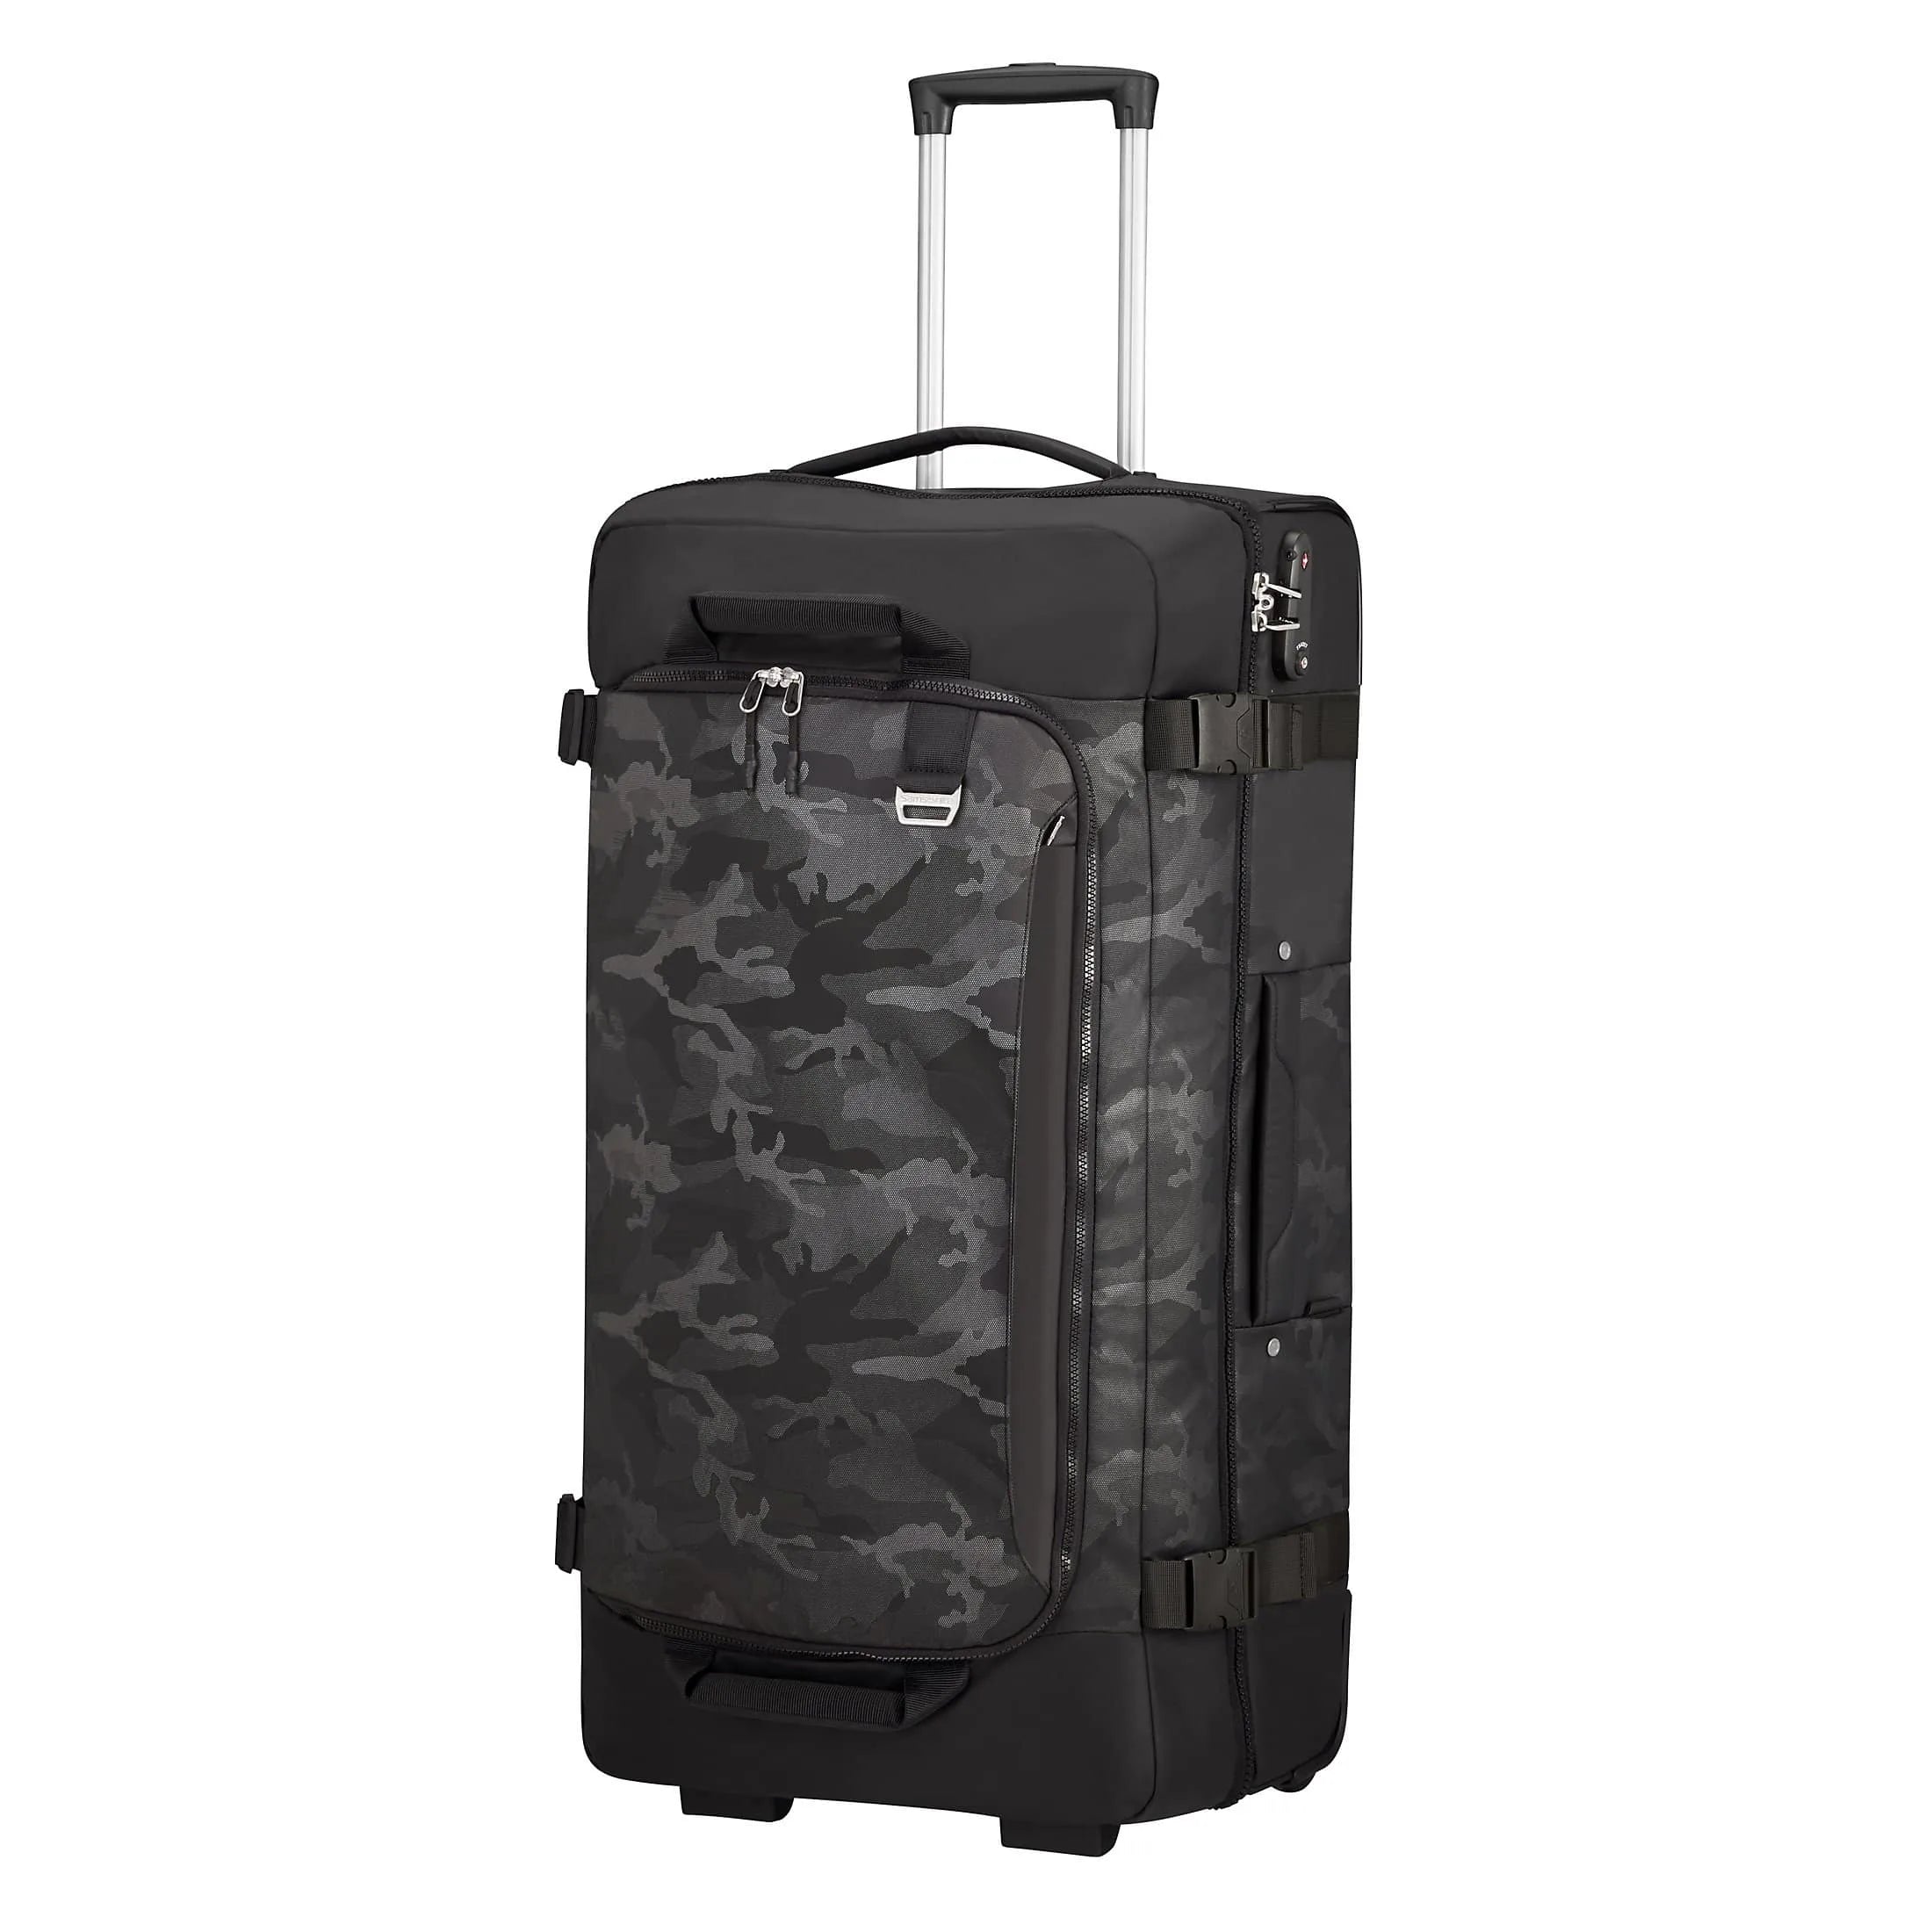 Samsonite Midtown Duffle travel bag with wheels 79 cm - Camo Grey